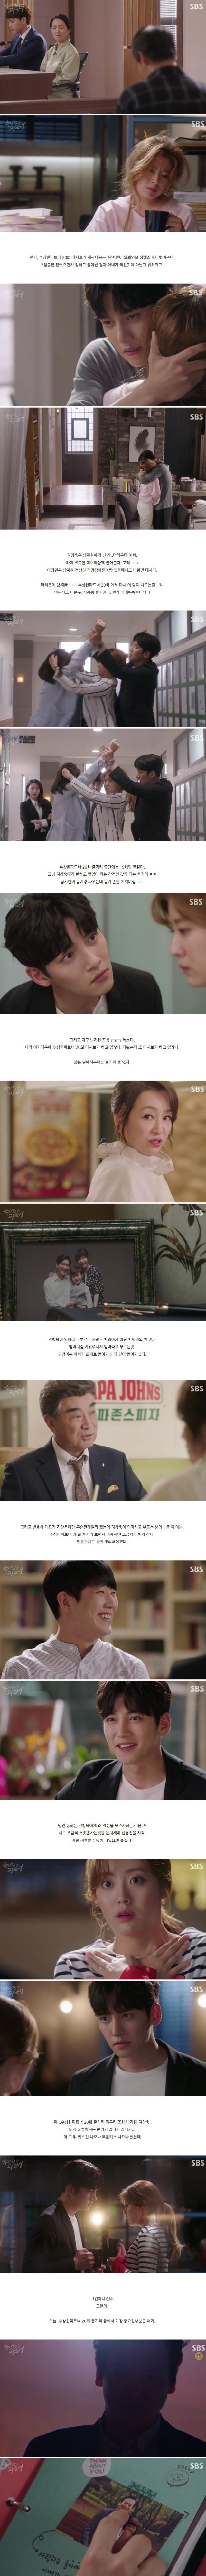 episodes 19 and 20 captures for the Korean drama 'Suspicious Partner'